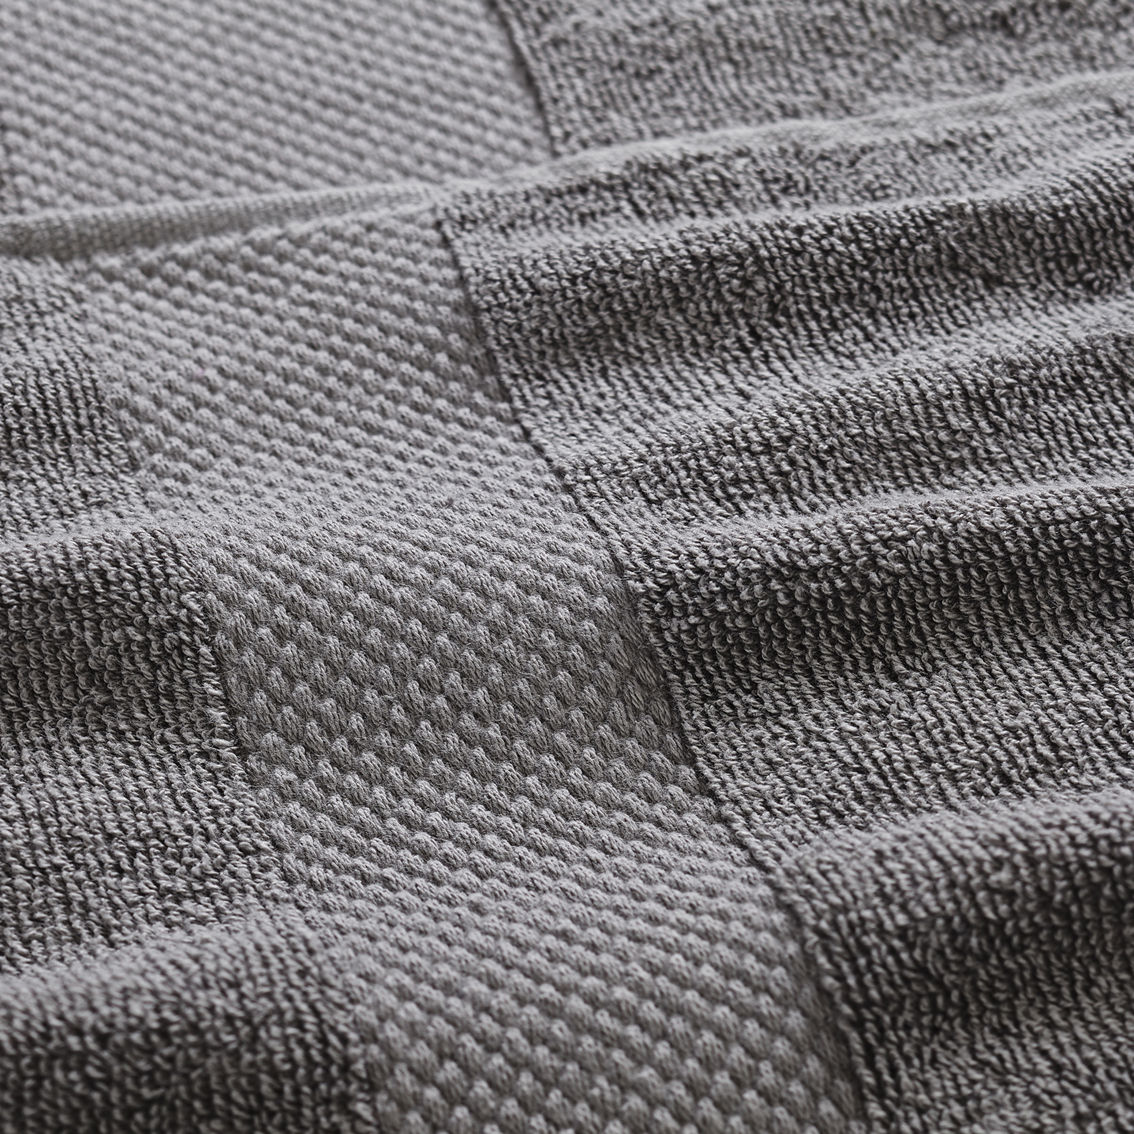 Modern Threads Filigree Jacquard Border Towel 6 pc. Set - Image 2 of 3